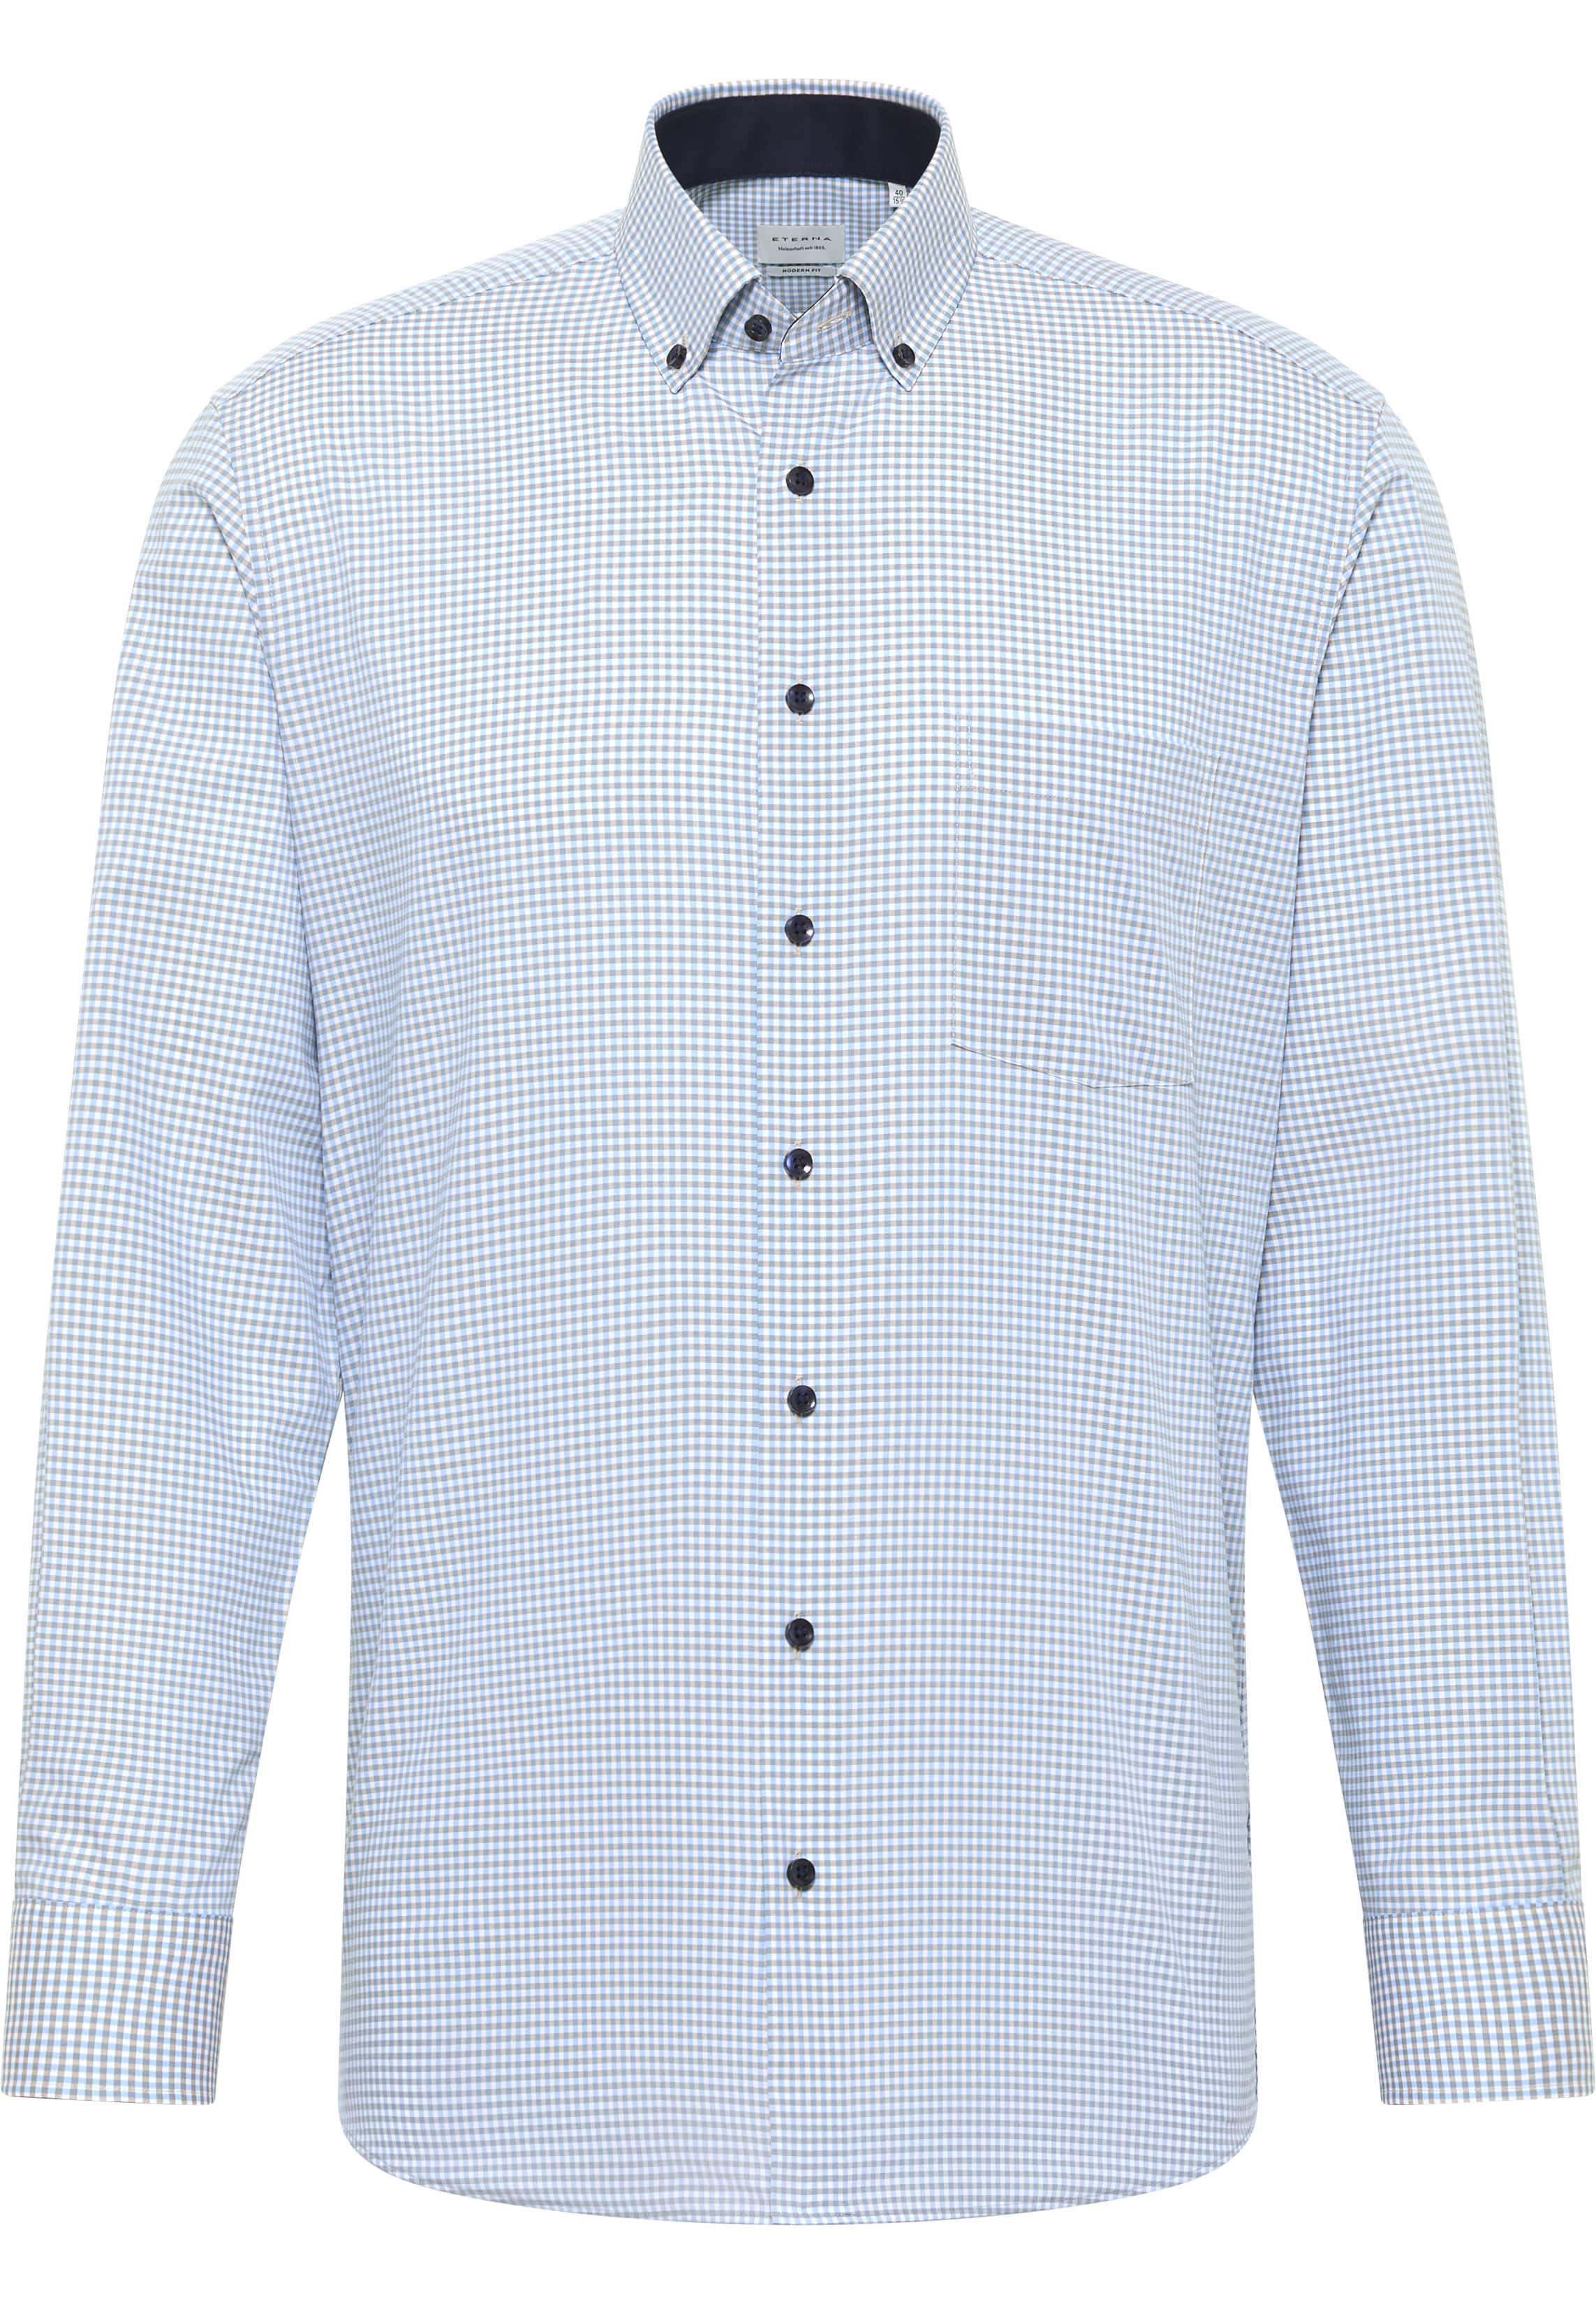 MODERN FIT Shirt in aqua checkered